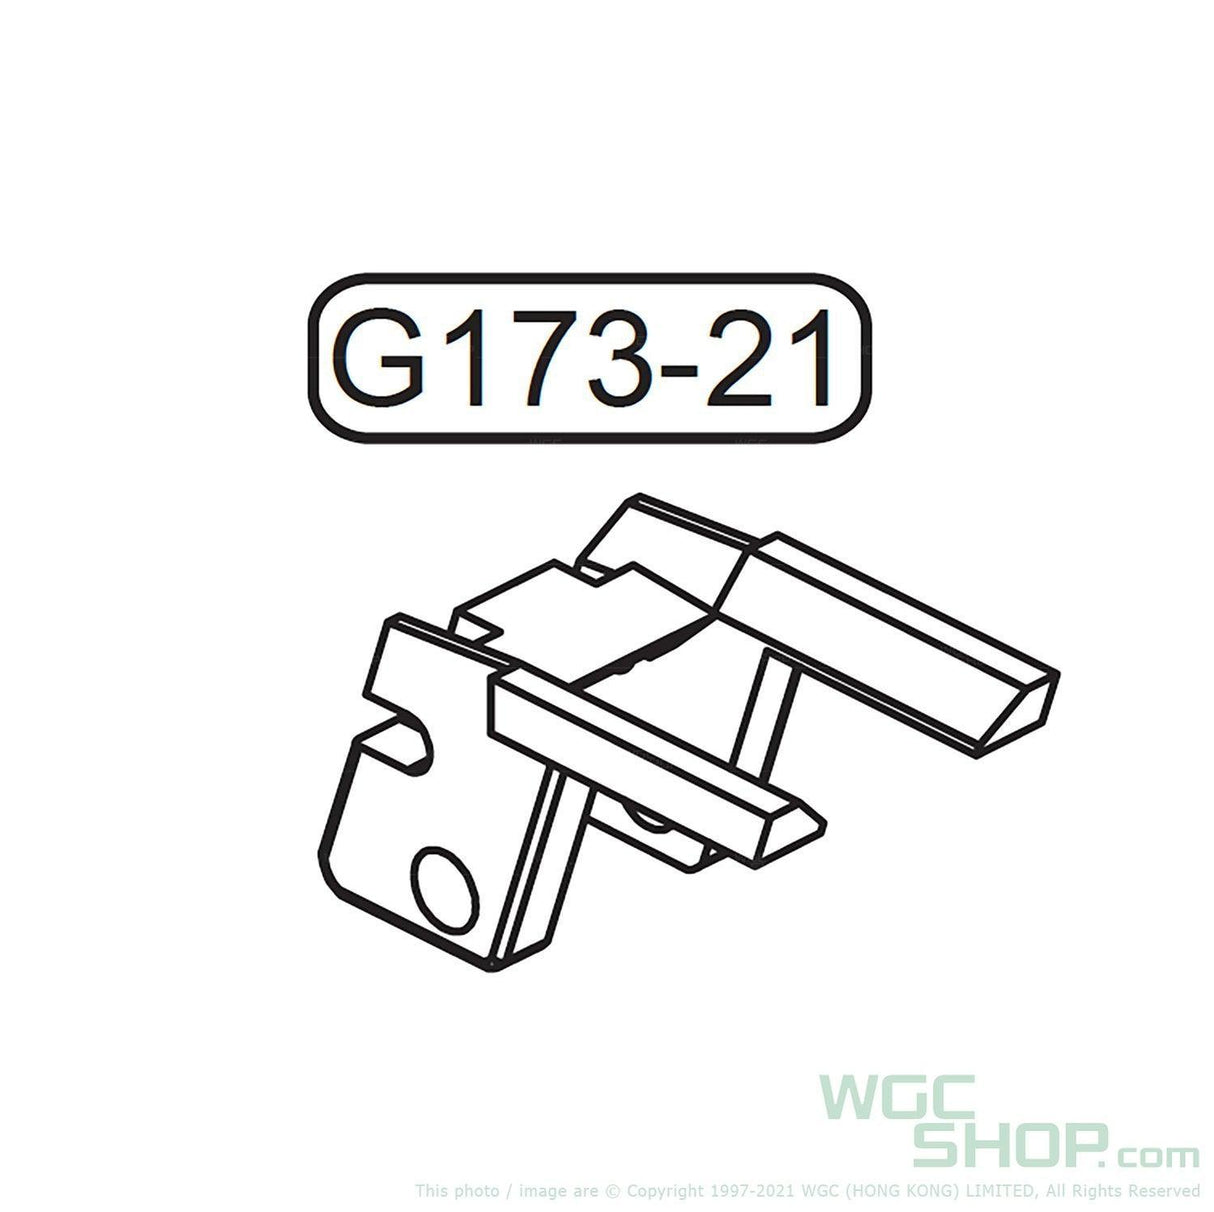 GHK Original Parts - Glock G17 Gen3 Trigger Locator for GBB Airsoft ( G173-21 ) - WGC Shop